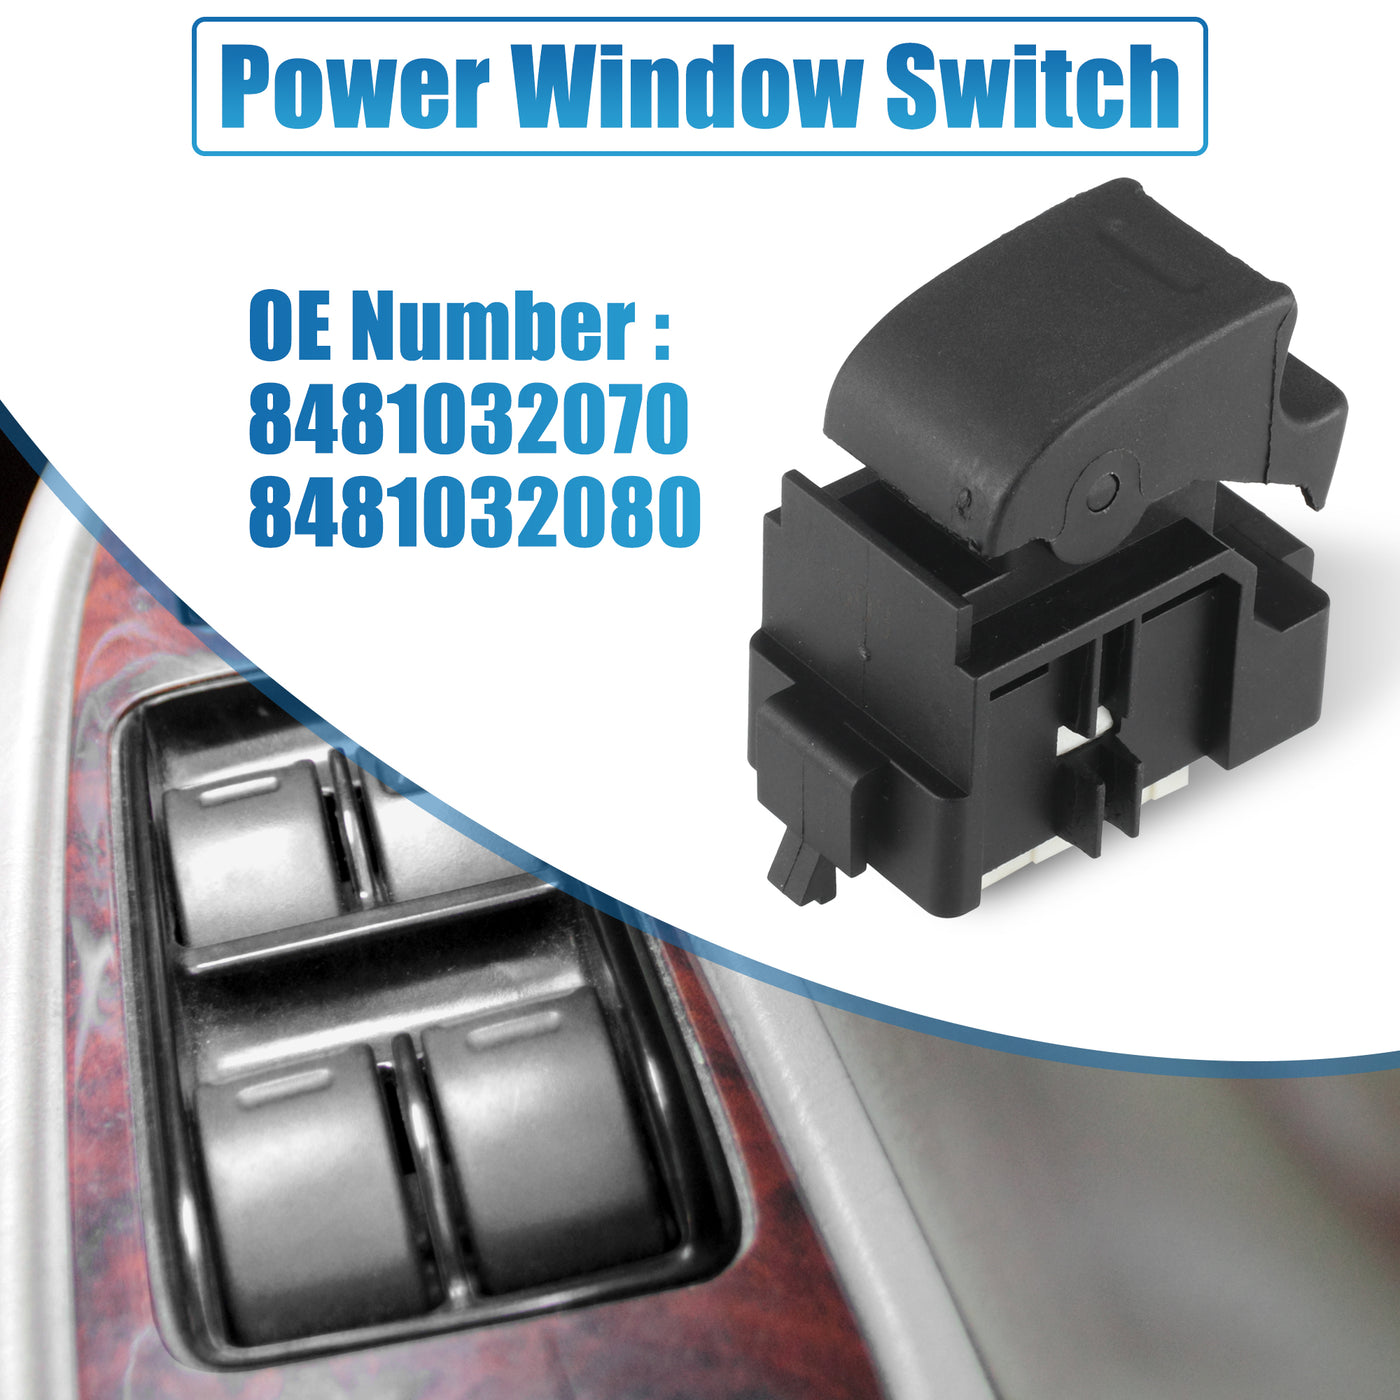 A ABSOPRO Power Window Switch 8481032070 8481032080 Front Rear Passenger Side Power Master Window Control Switch for Lexus LX450 1996-1997